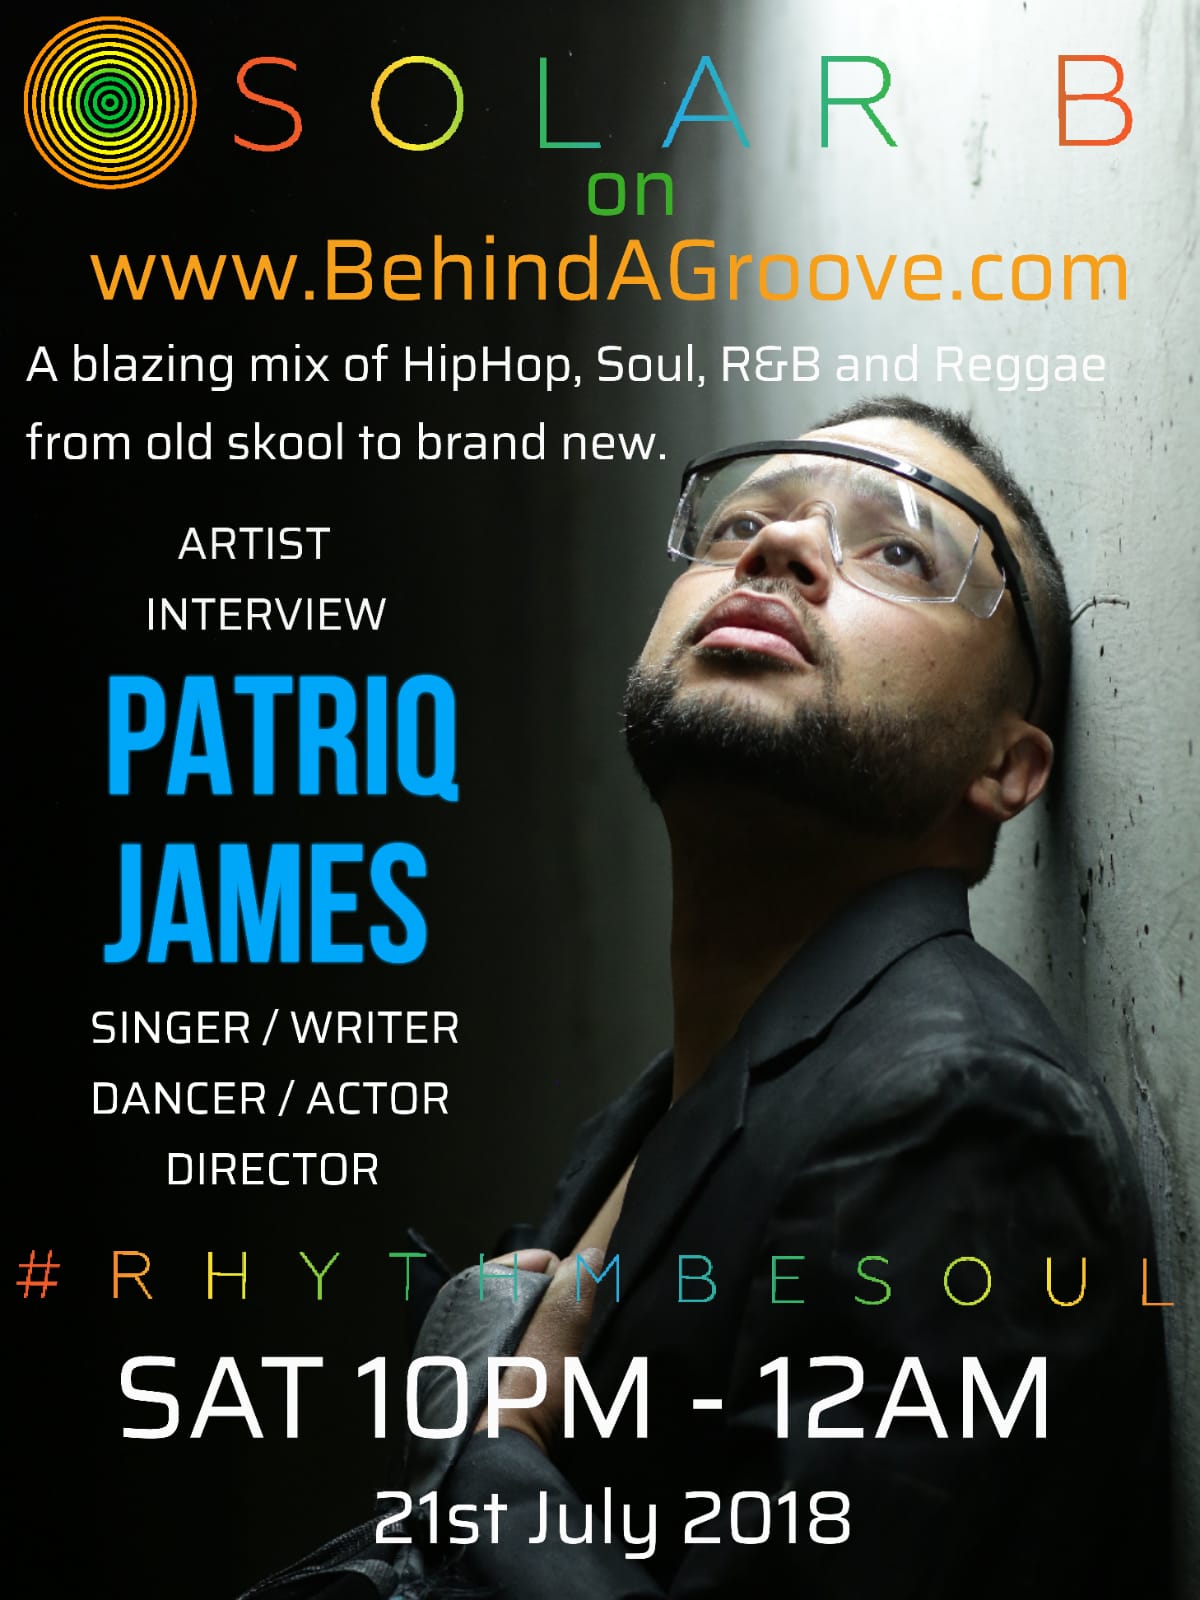 Rhythm Be Soul with Solar B Artist interview Patriq James